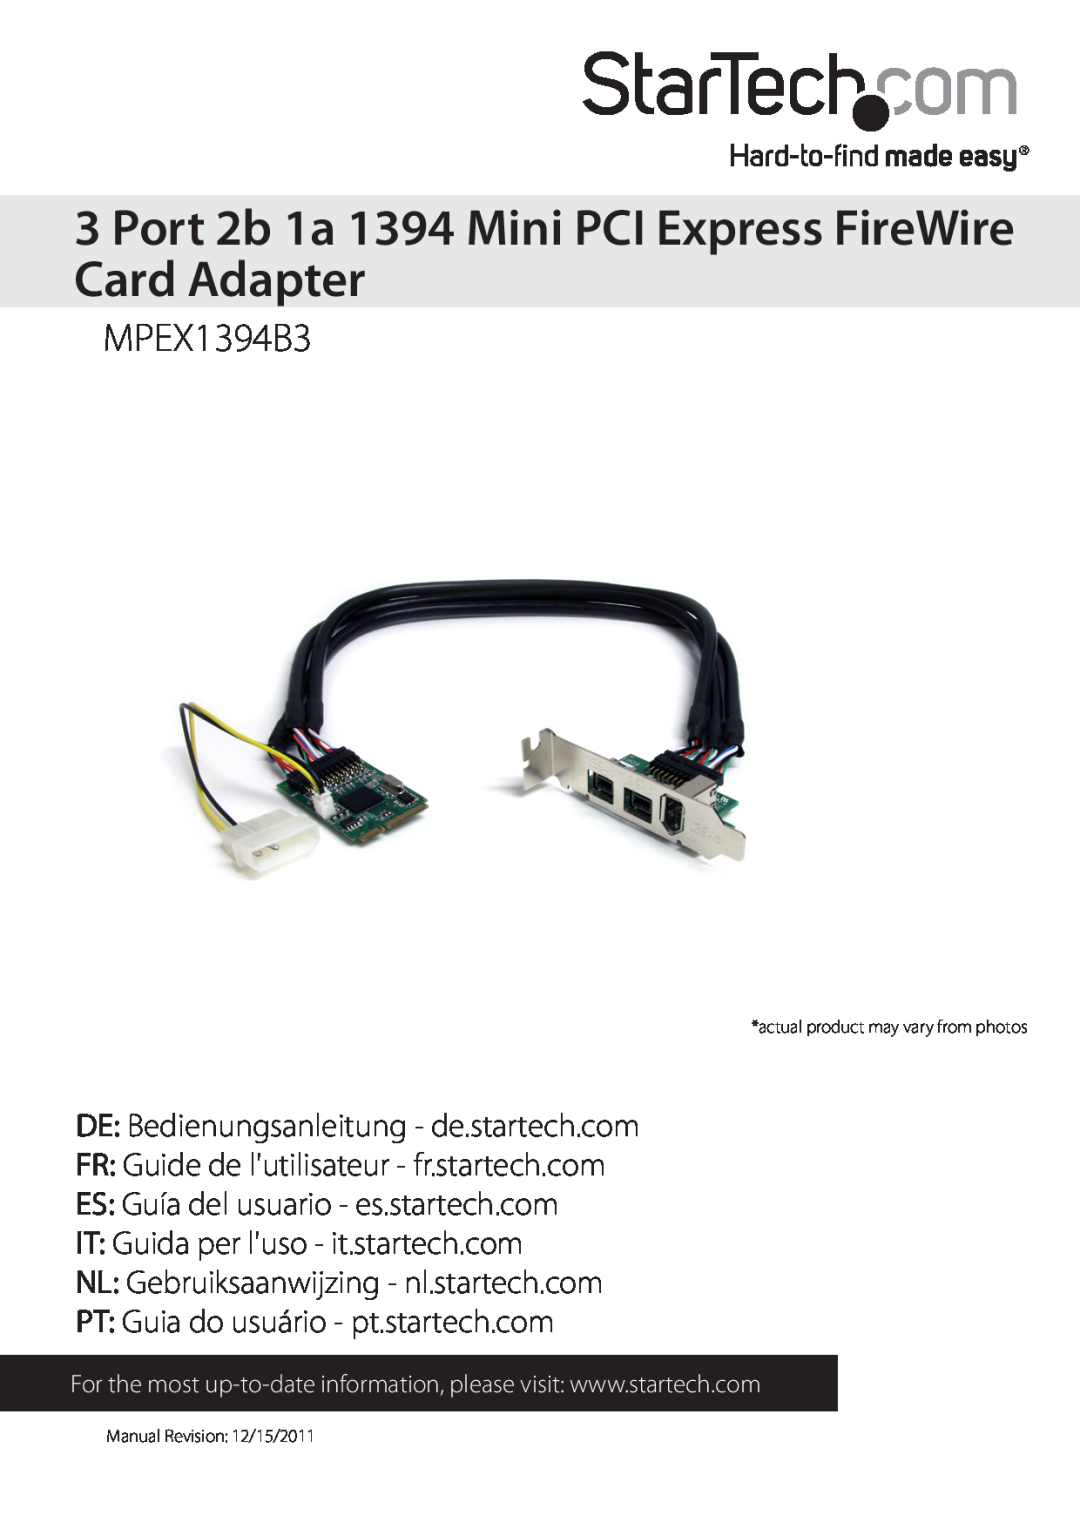 StarTech.com manual Port 2b 1a 1394 Mini PCI Express FireWire Card Adapter, MPEX1394B3, Manual Revision 12/15/2011 